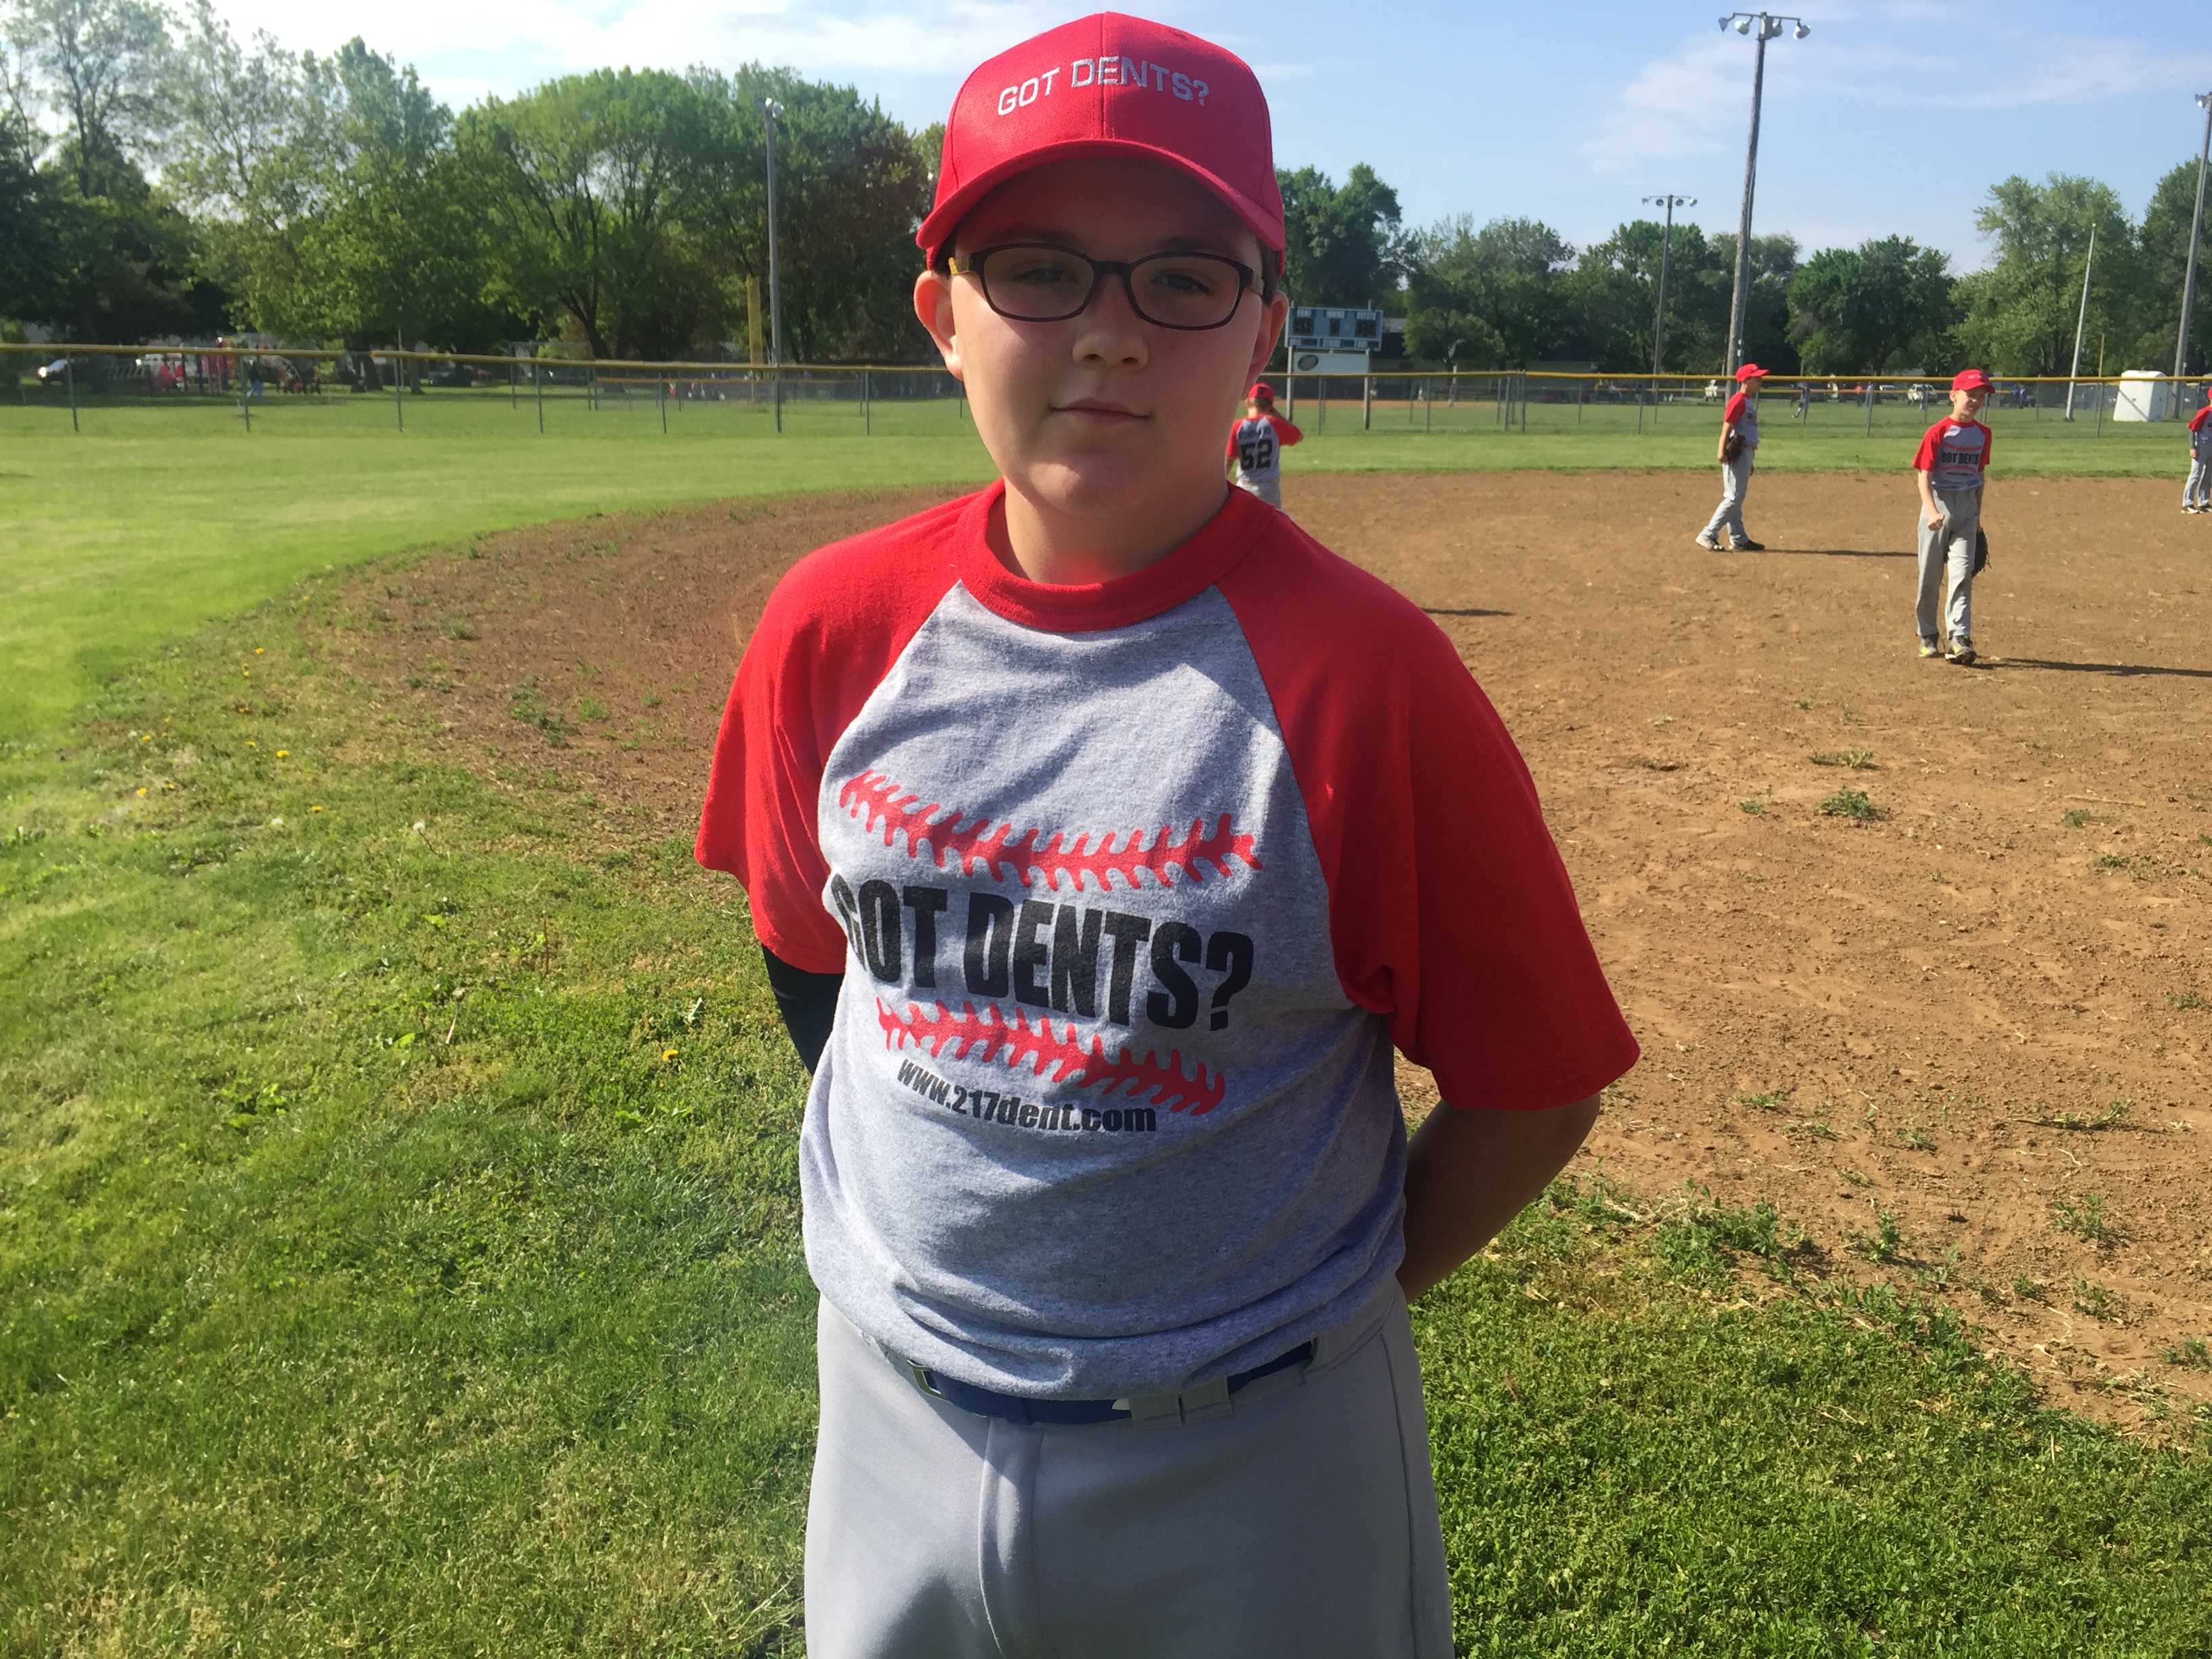 https://217dent.com 2016 Got Dents Springfield, IL Images baseball team sponsored